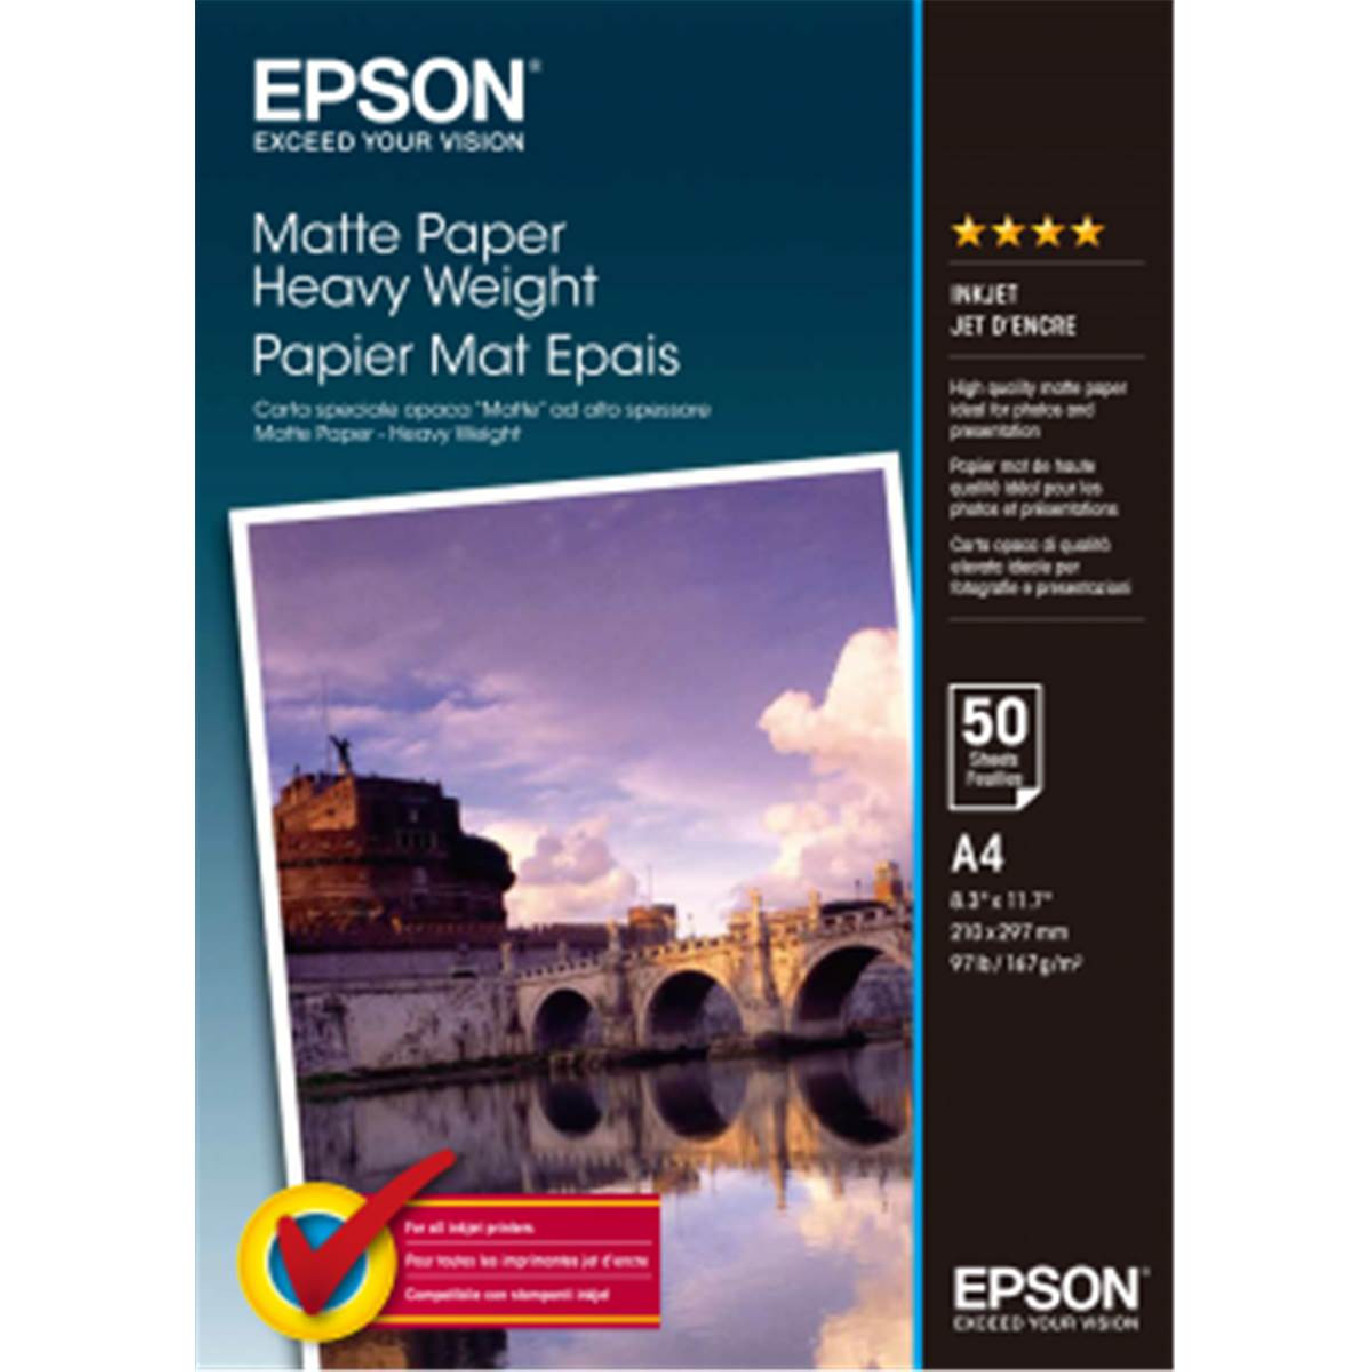 Epson Papier Mat Epais 167gr A4 boite 50 feuilles - Prophot